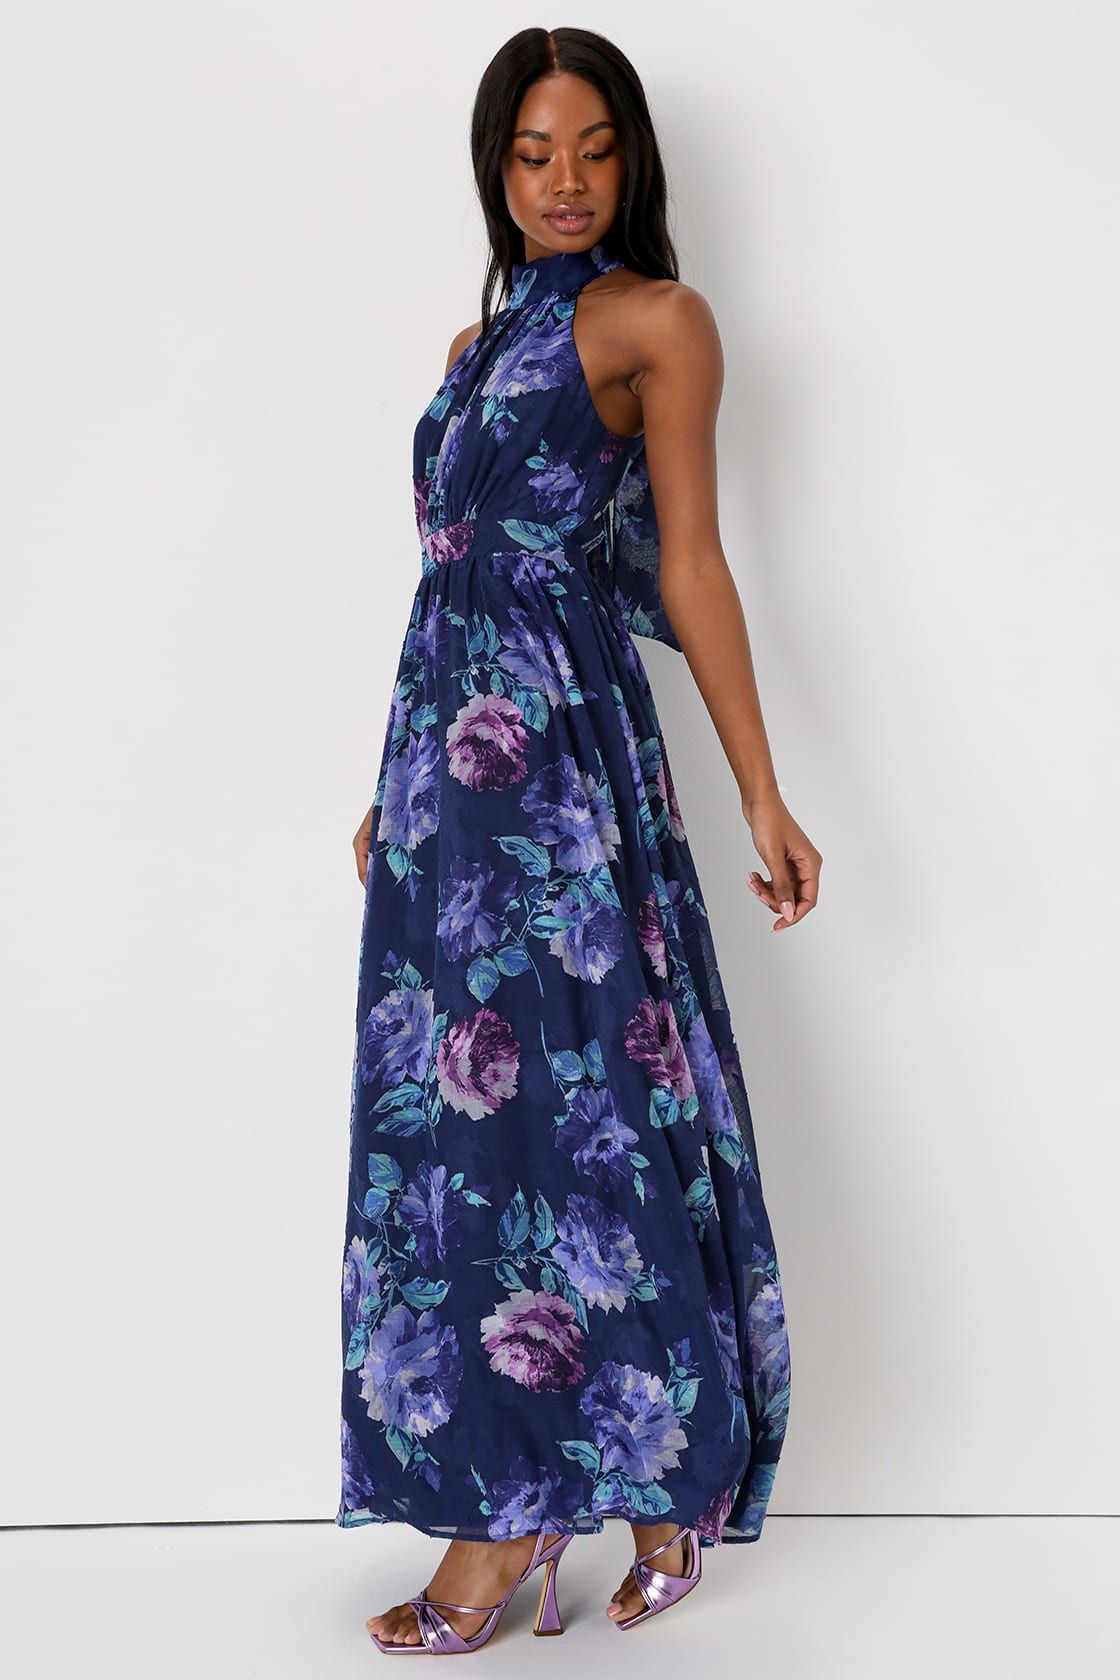 Splendid Perfection Navy Blue Floral Jacquard Maxi Dress | Lulus (US)